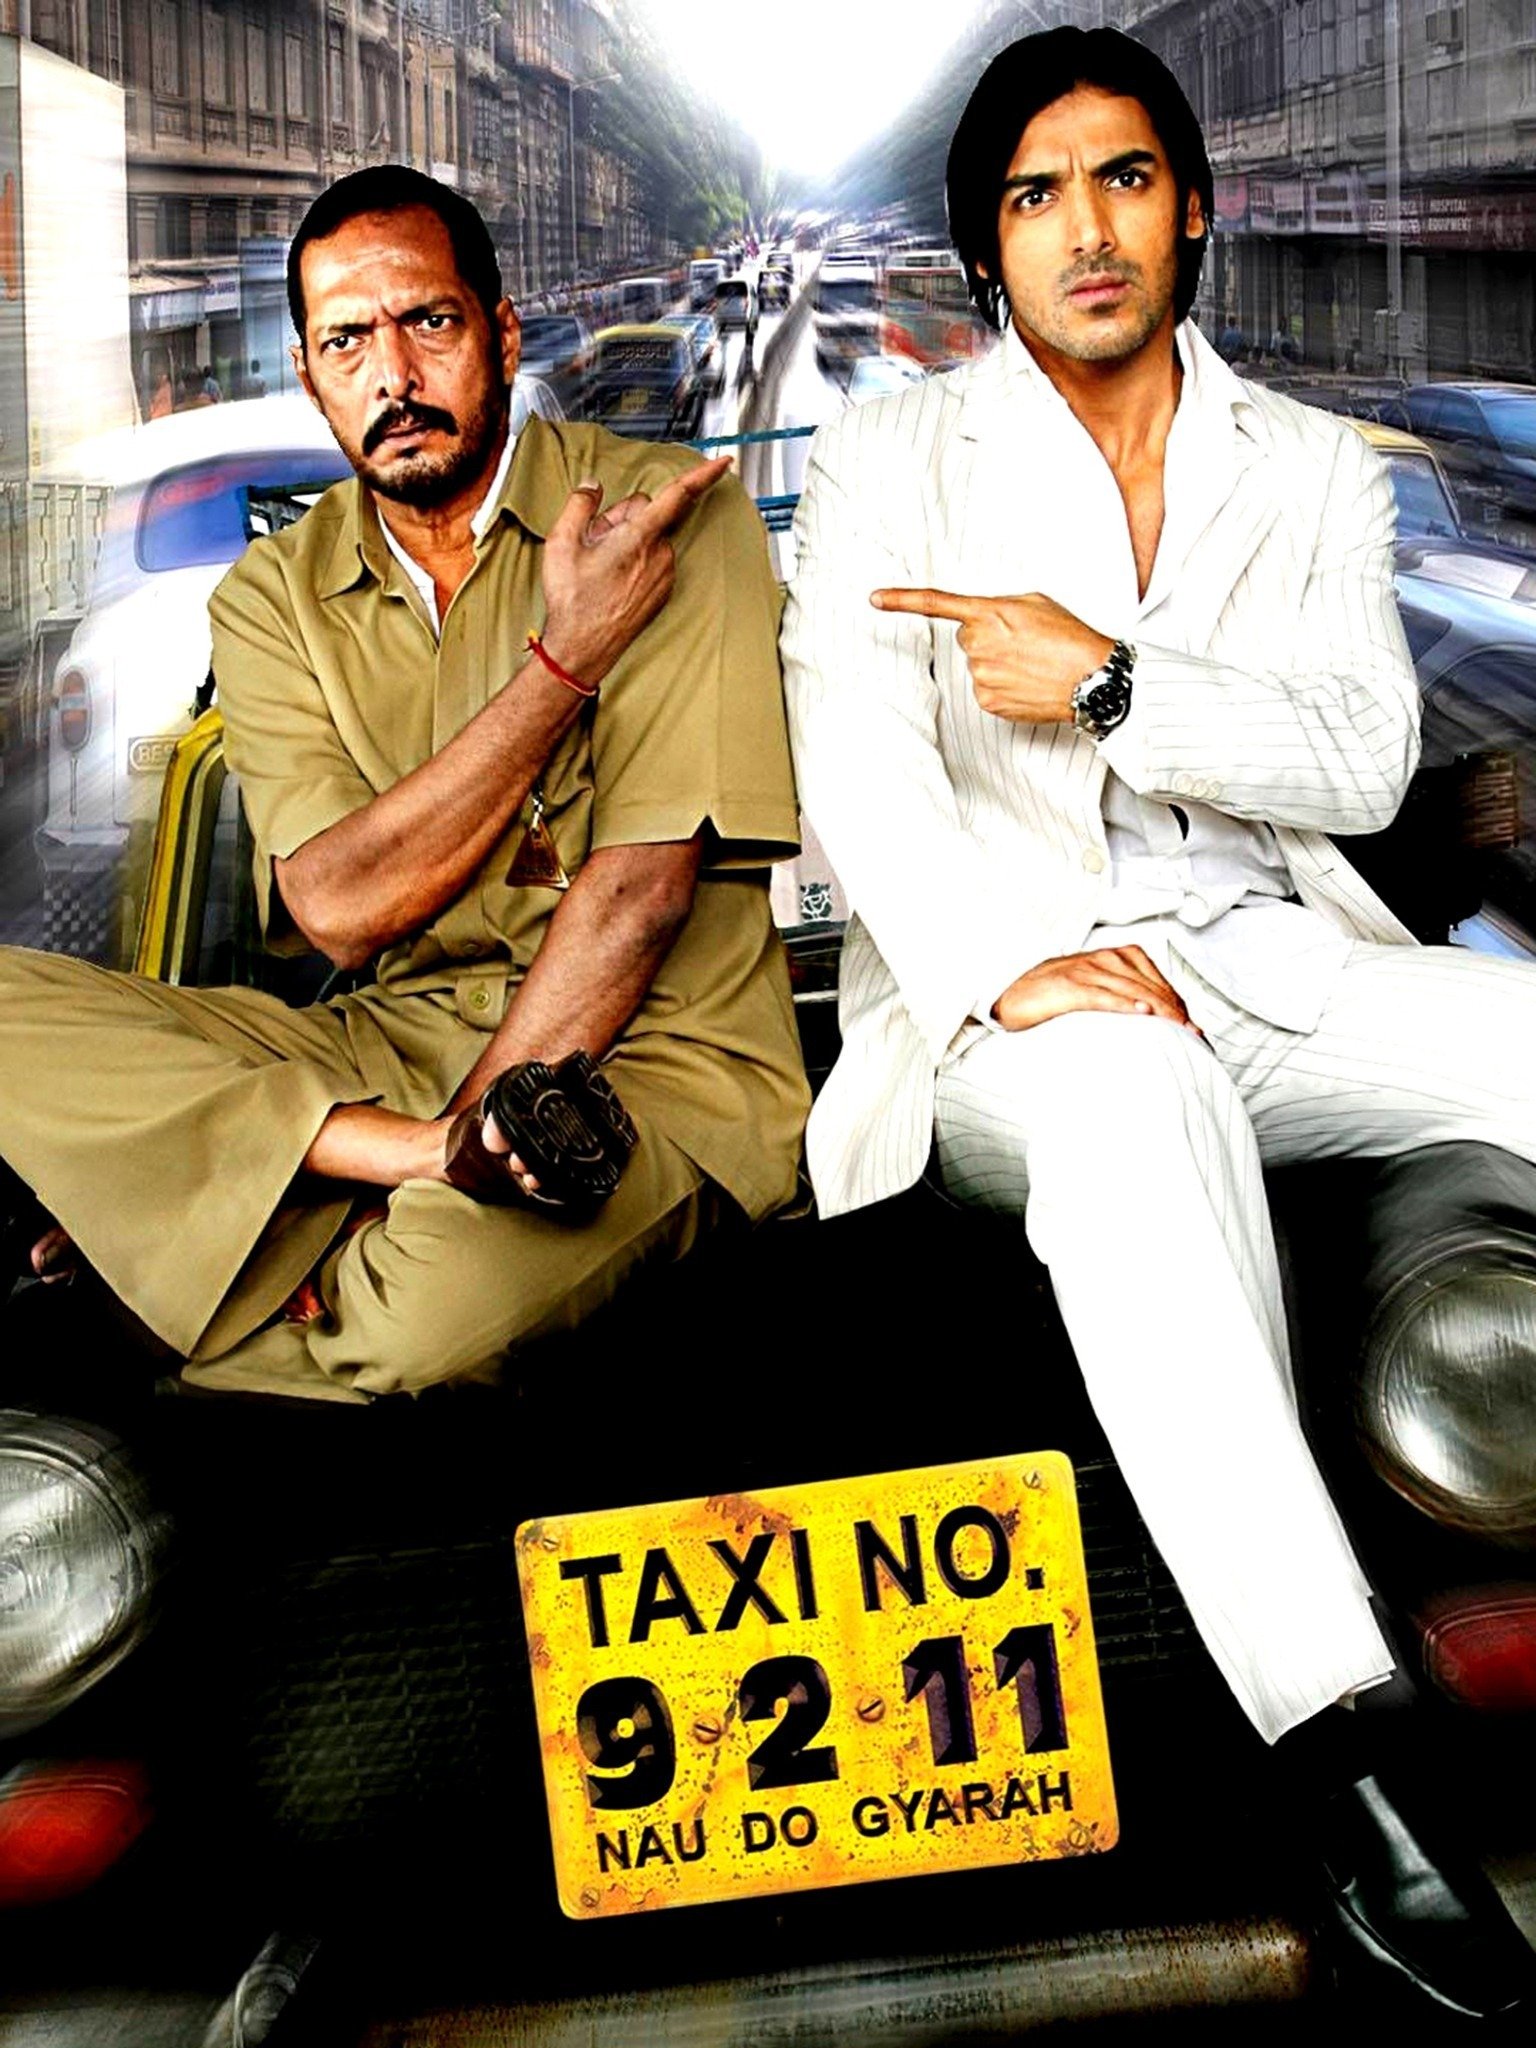 Taxi No 9 2 11 2006 5686 Poster.jpg